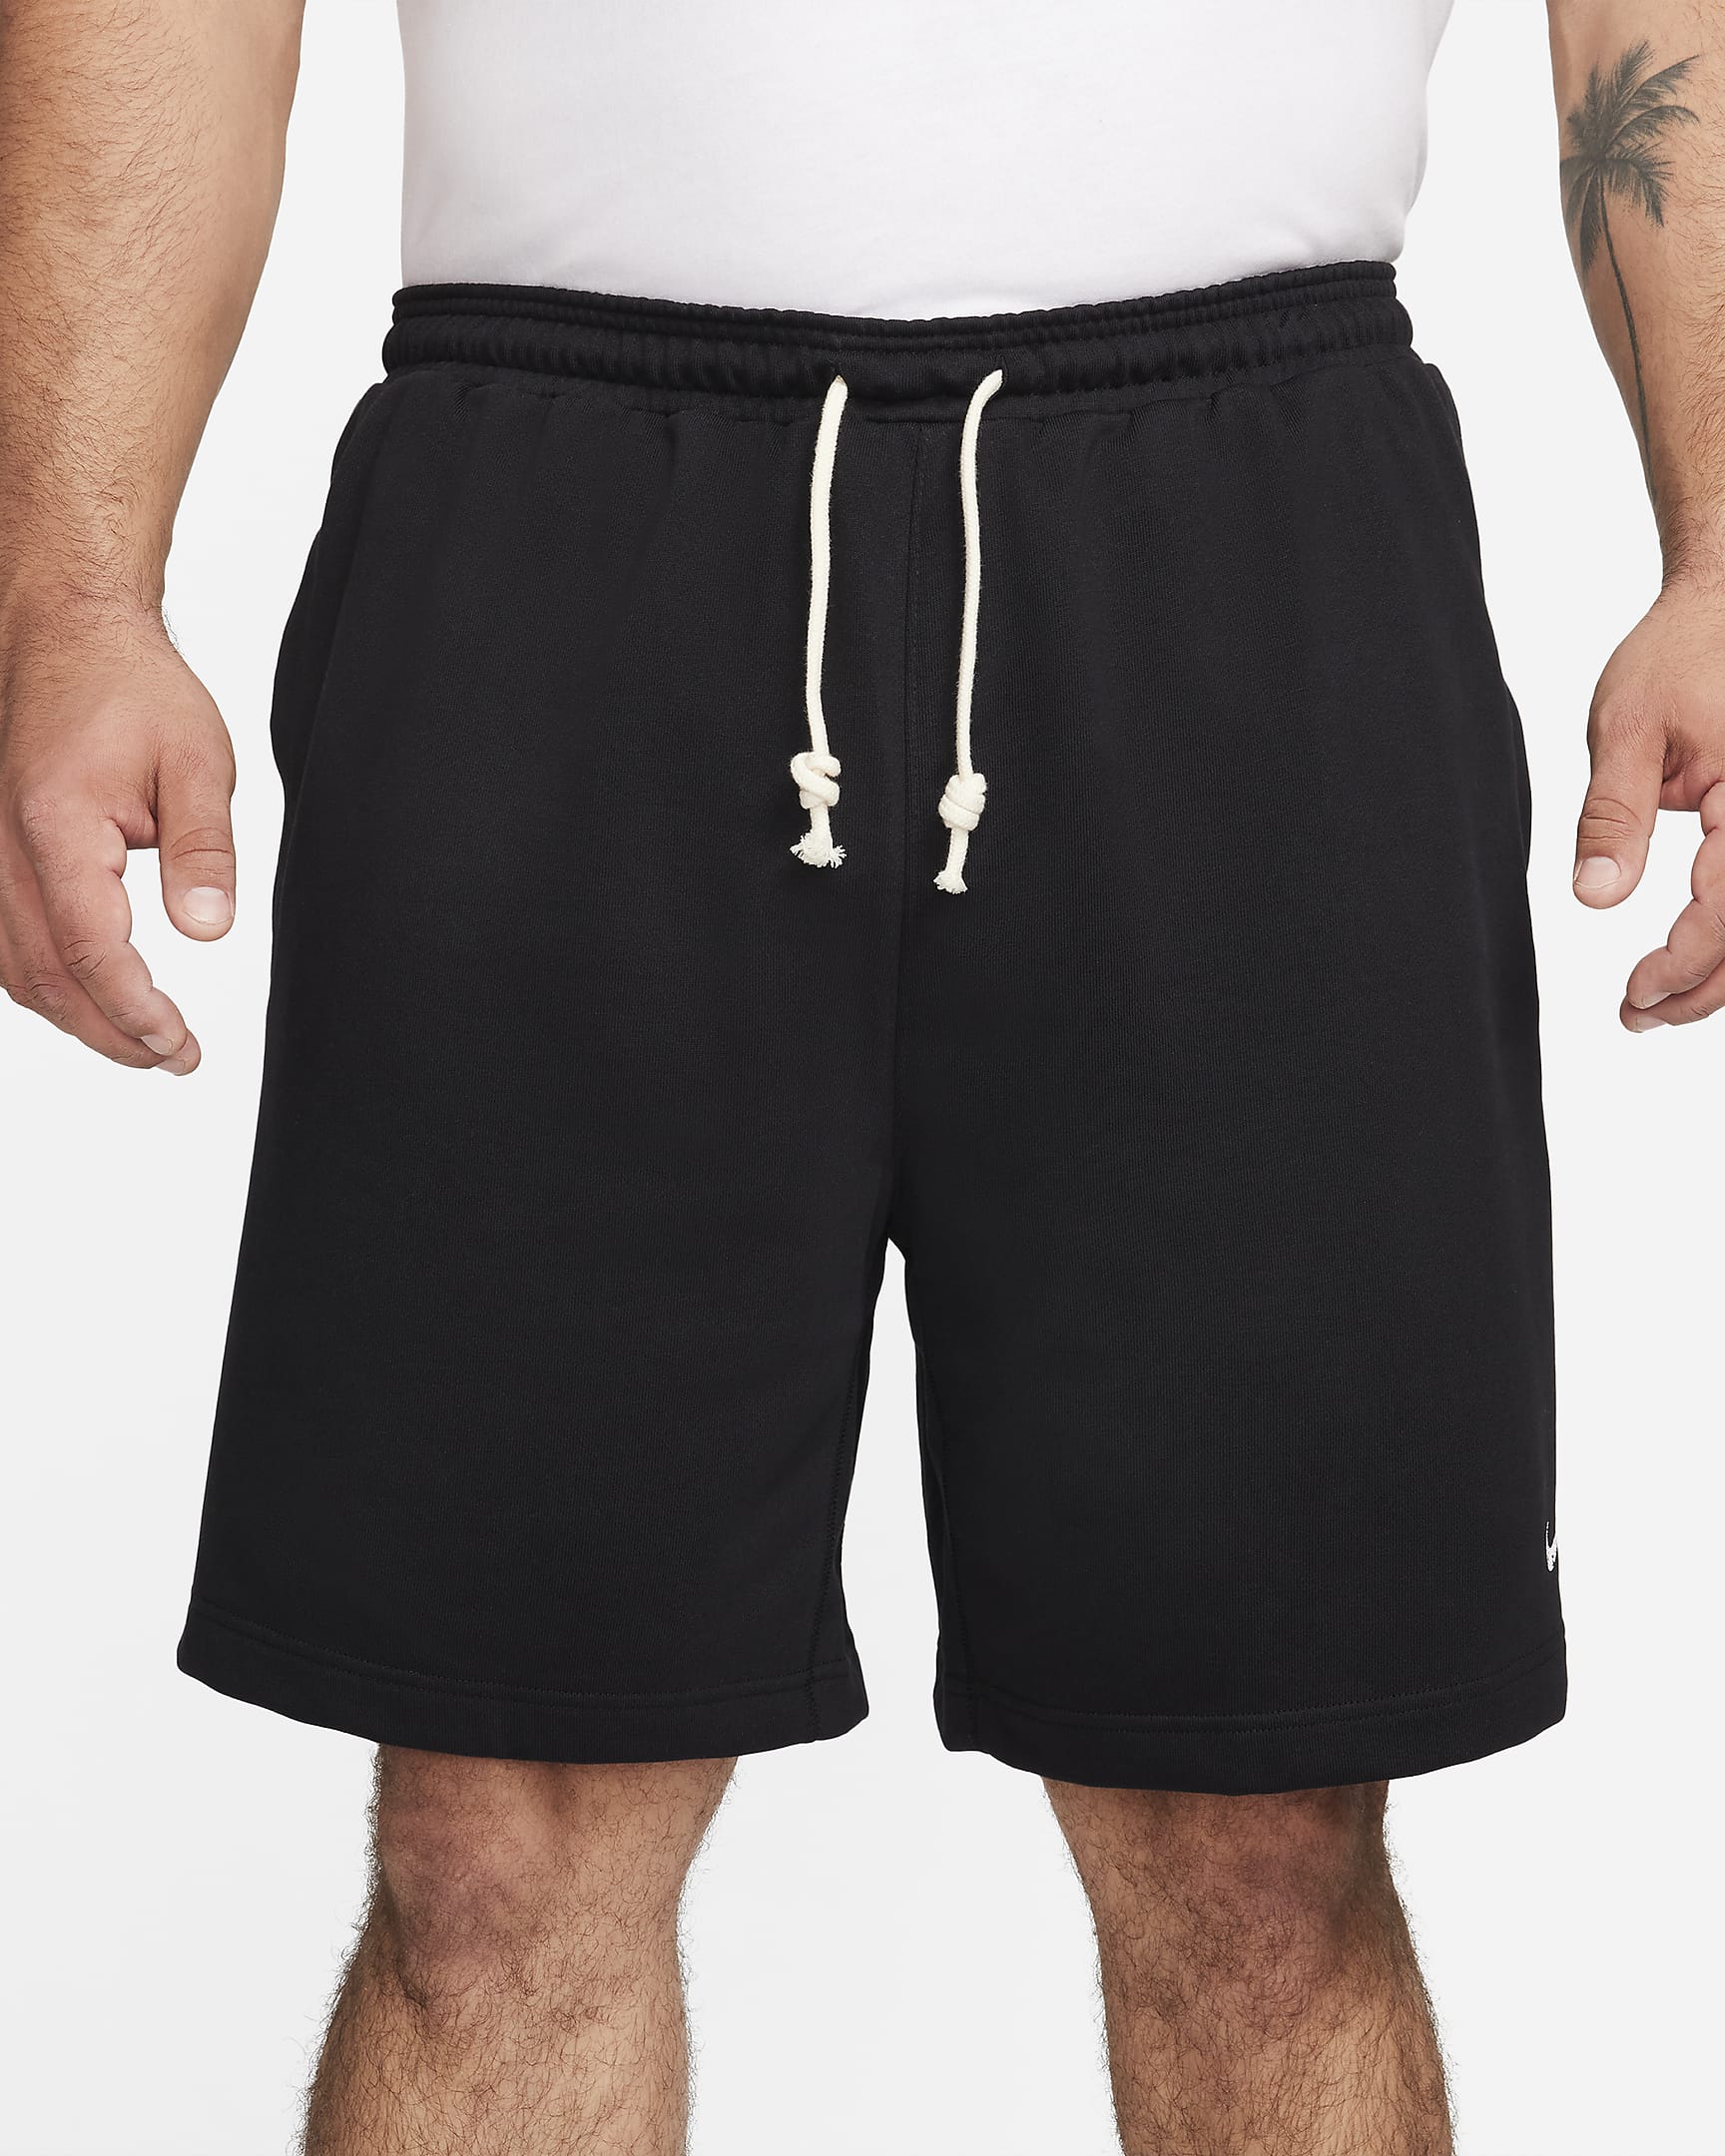 Shorts de básquetbol de French Terry de 20 cm para hombre Nike Dri-FIT ...